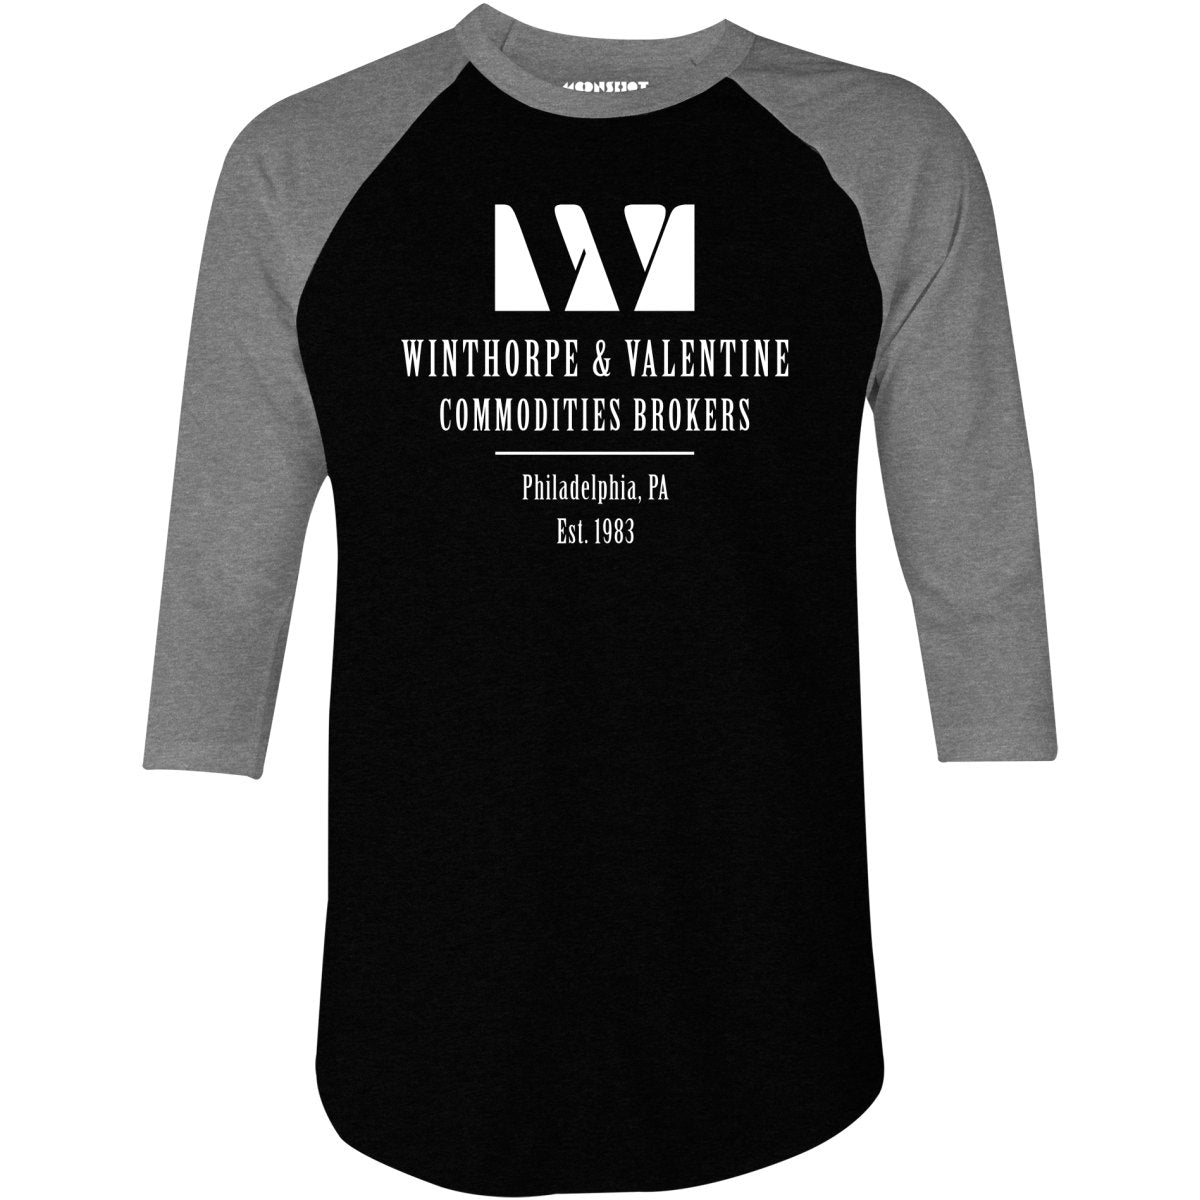 Winthorpe & Valentine Commodities Brokers - 3/4 Sleeve Raglan T-Shirt